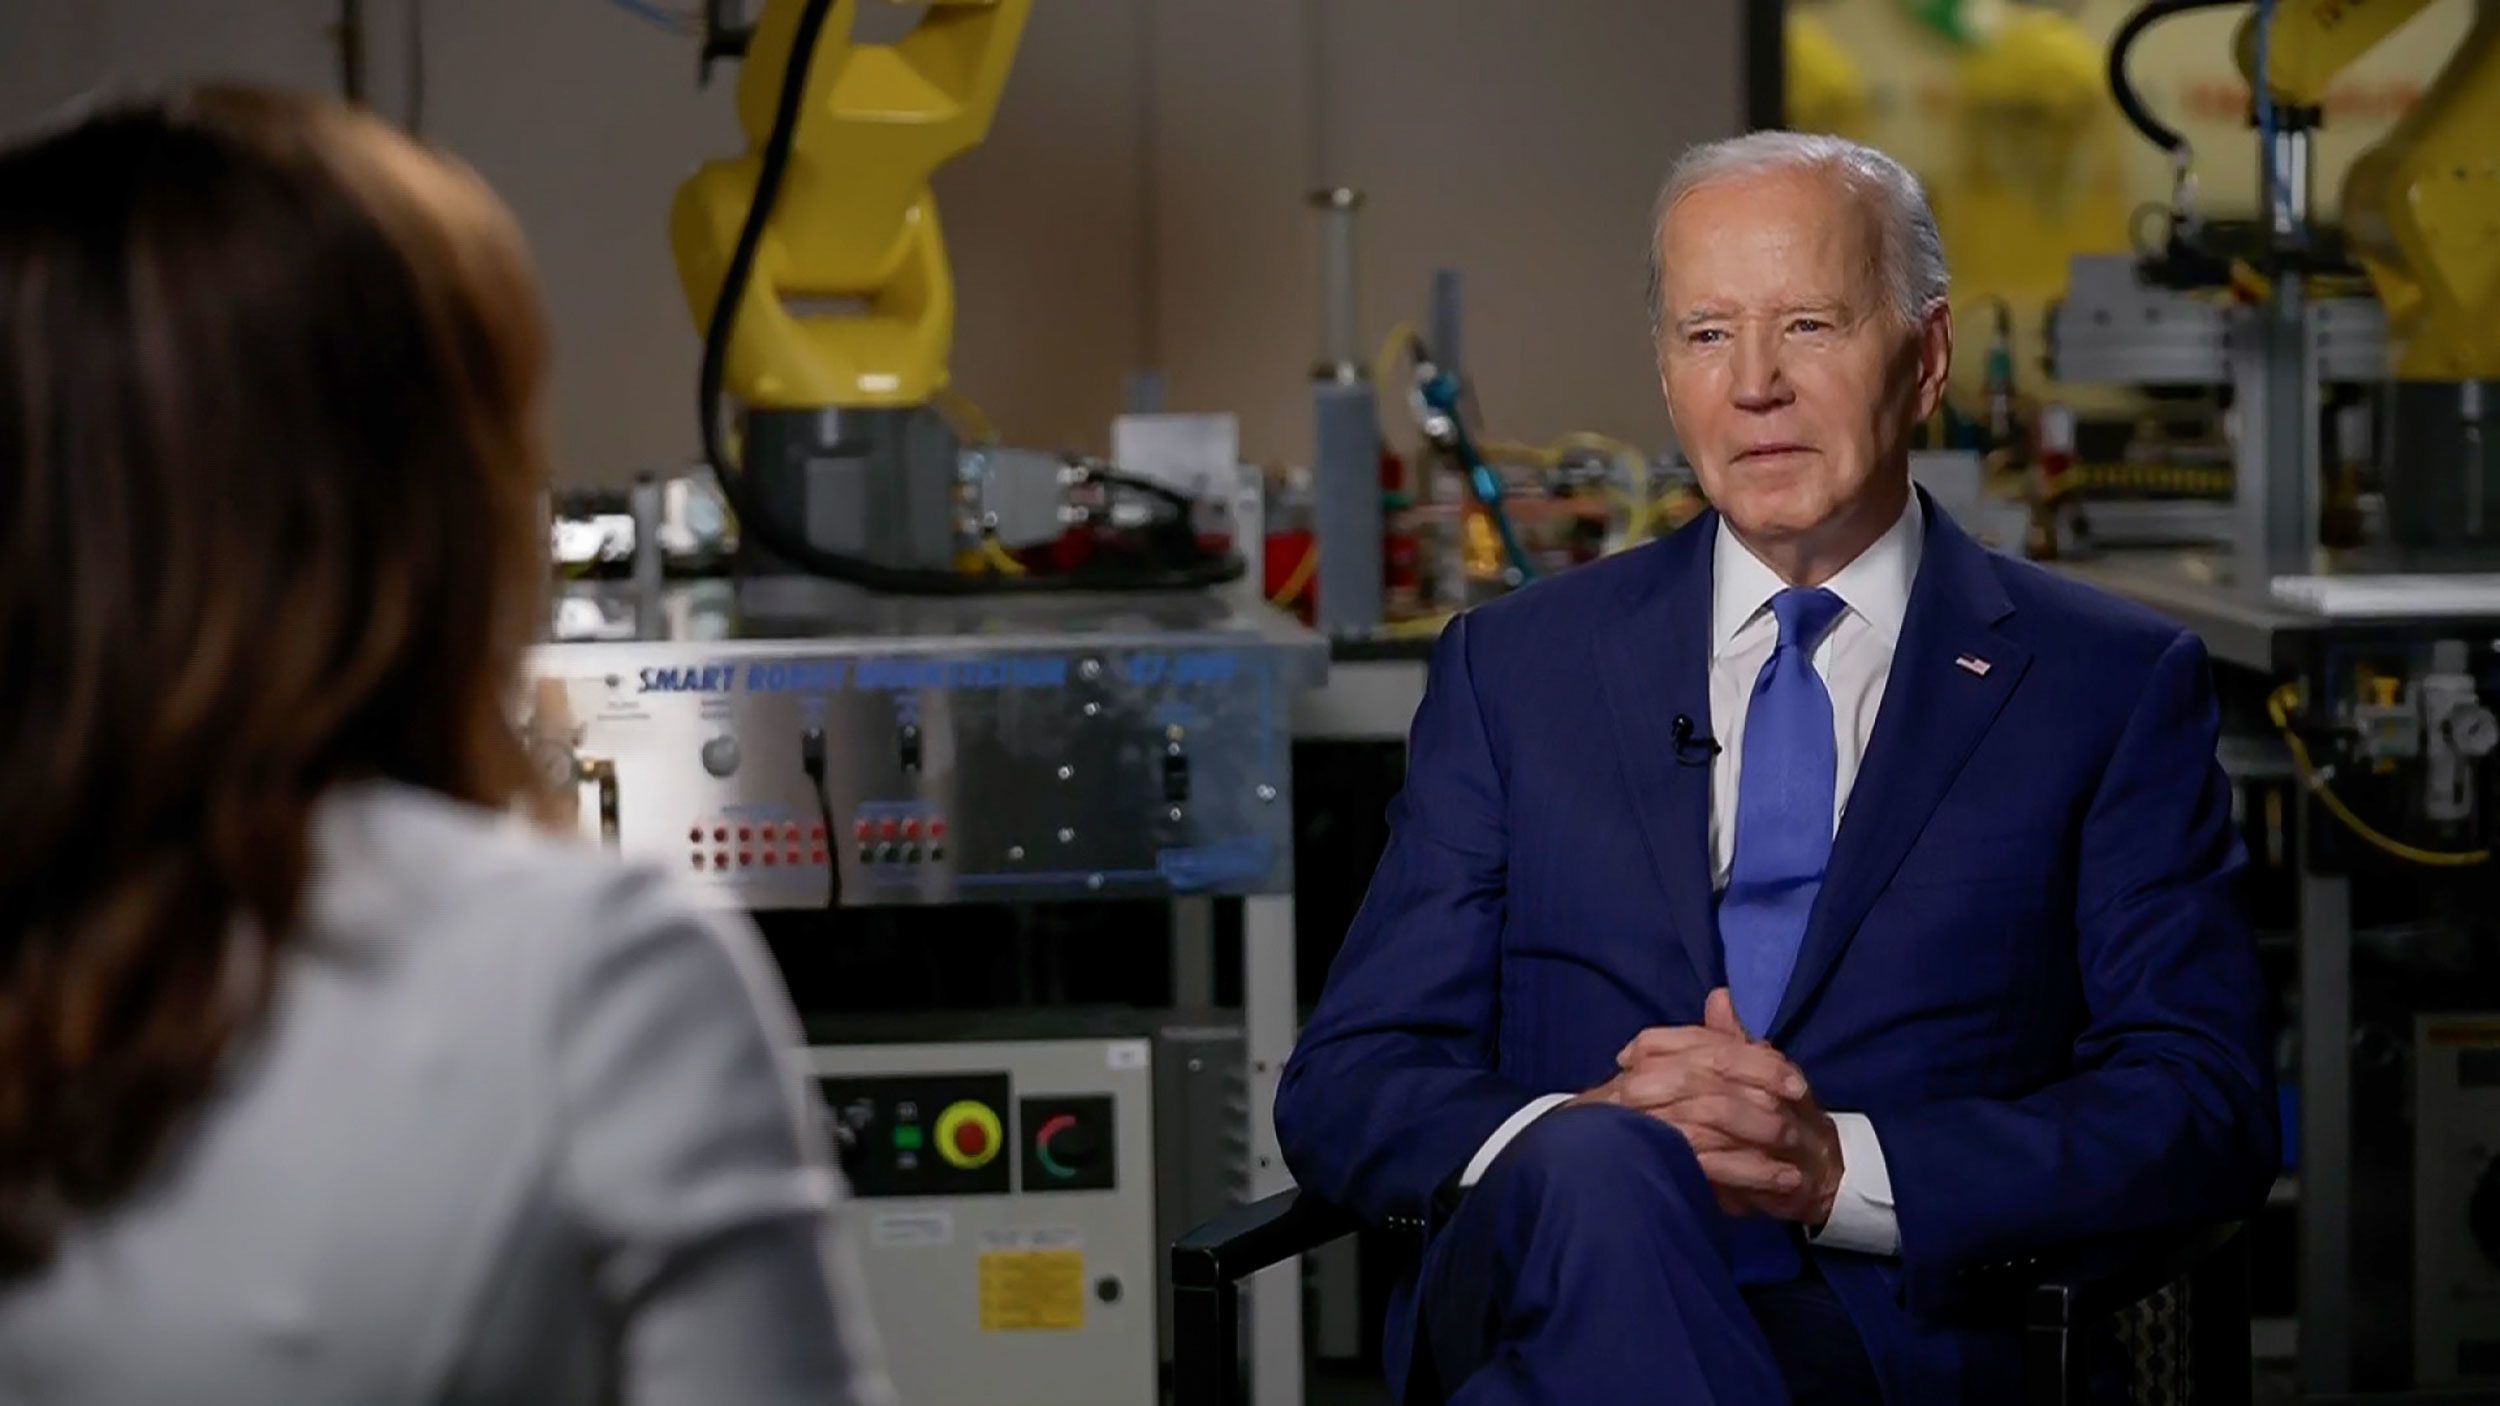 Biden faces bipartisan backlash on Capitol Hill over Israel ultimatum [Video]